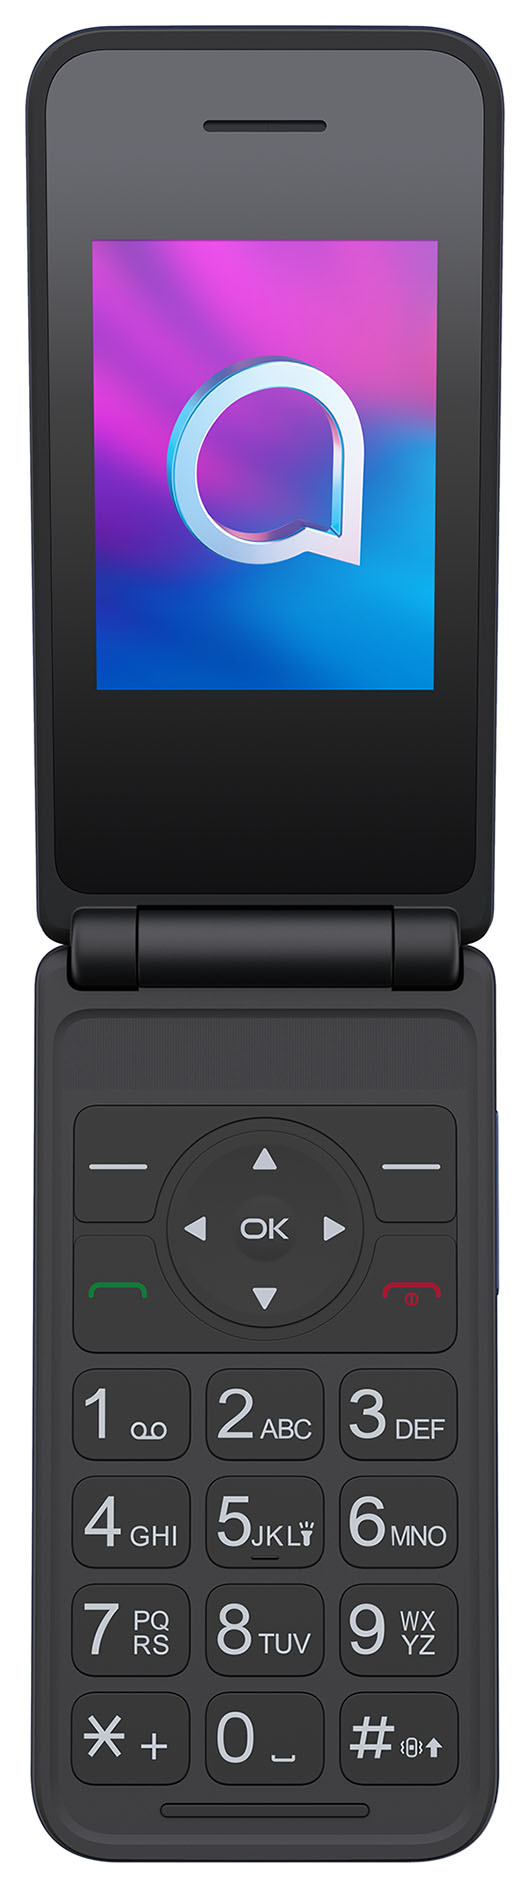 Мобильный телефон Alcatel 3082X 64Mb темно-серый раскладной 4G 1Sim 2.4" 240x320 0.3Mpix GSM900/1800 FM microSD max32Gb